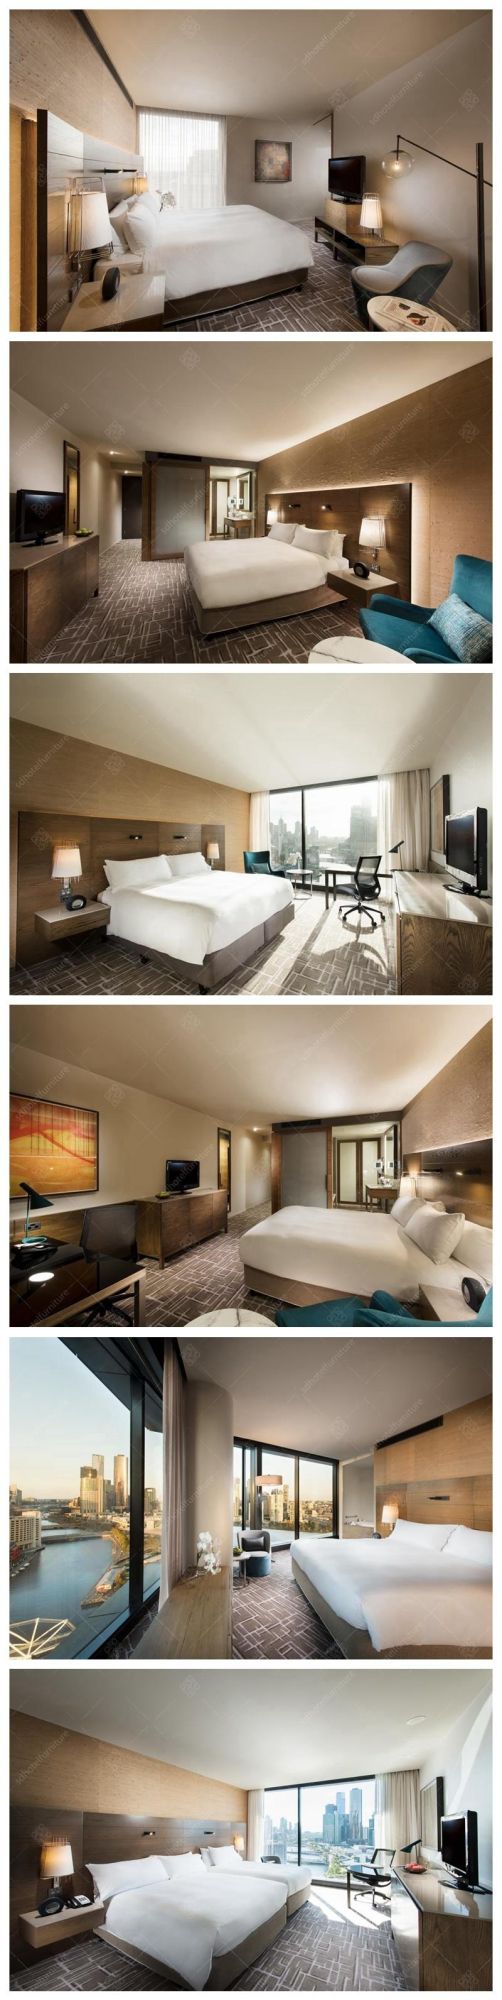 Fashionable Design Comfortable Hotel Room Furniture Sets for 5 Stars